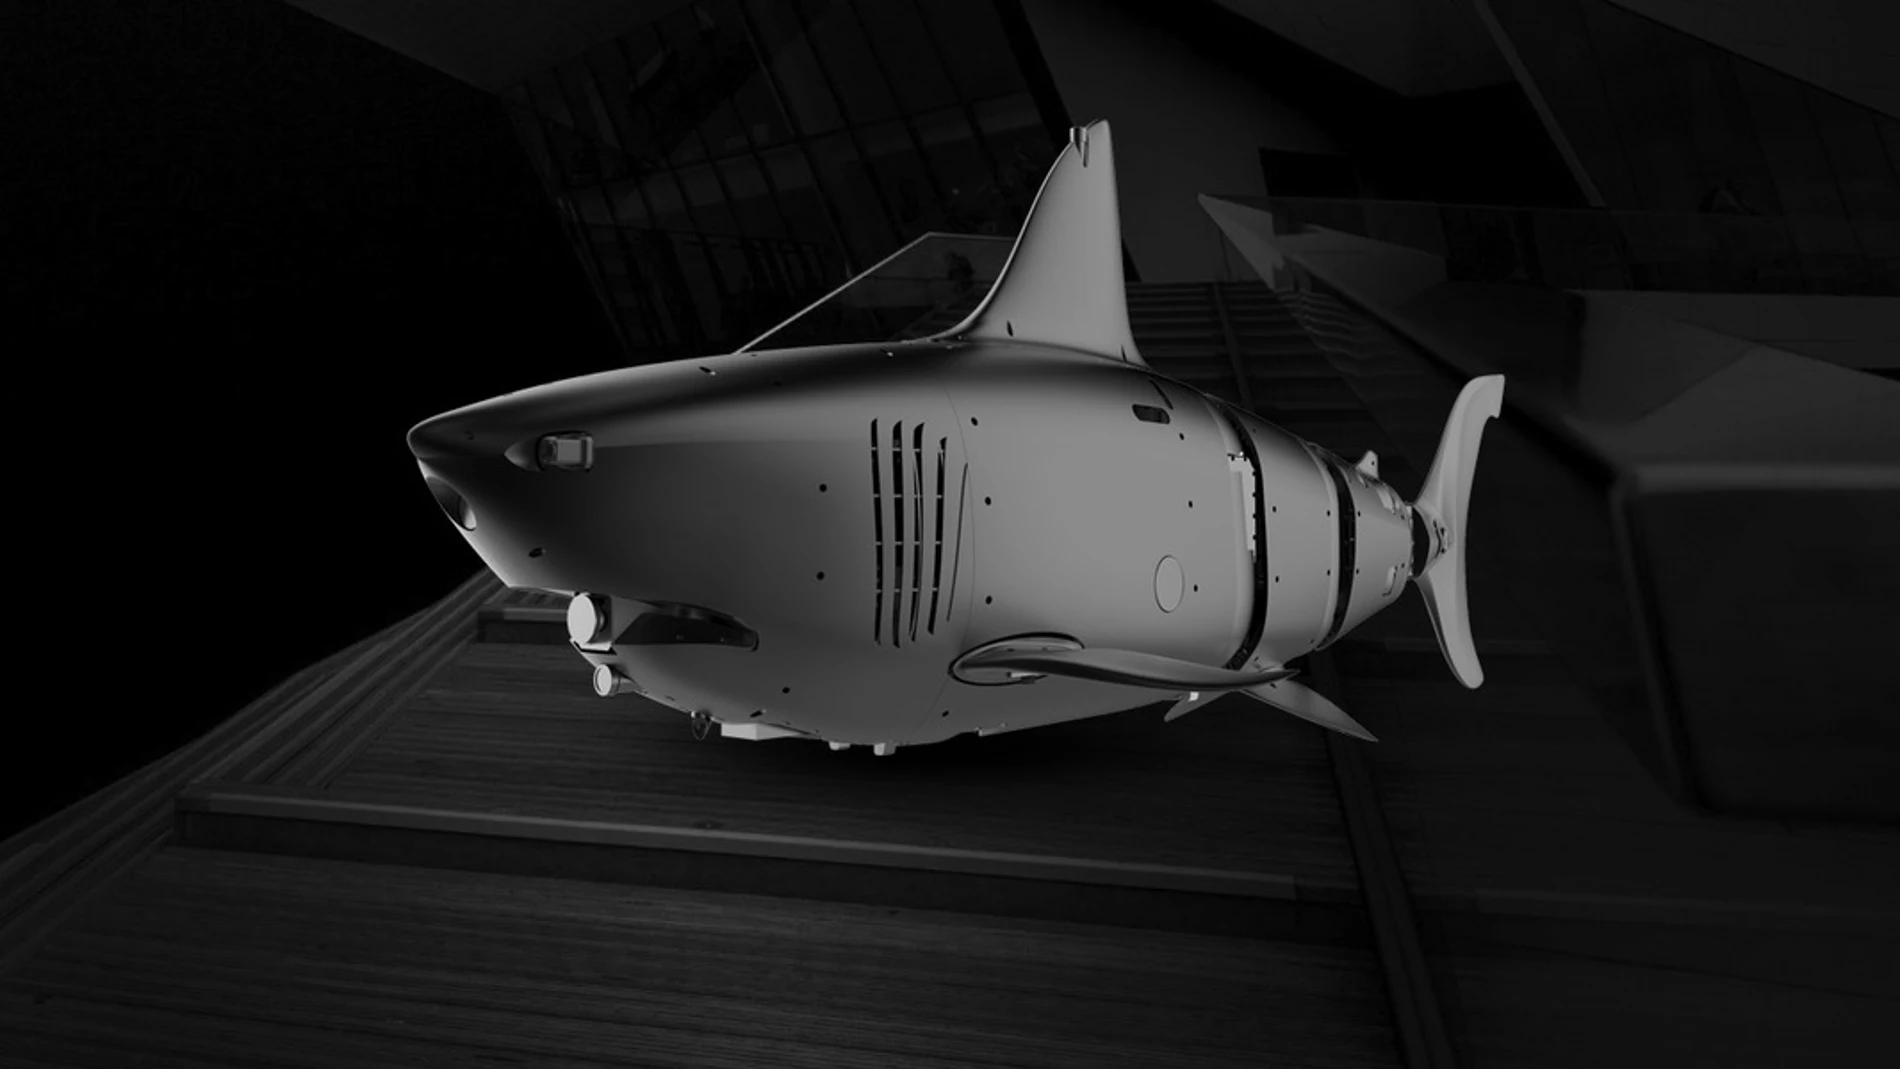 Este nuevo vehículo submarino autónomo se llama Robo-Shark / Robosea